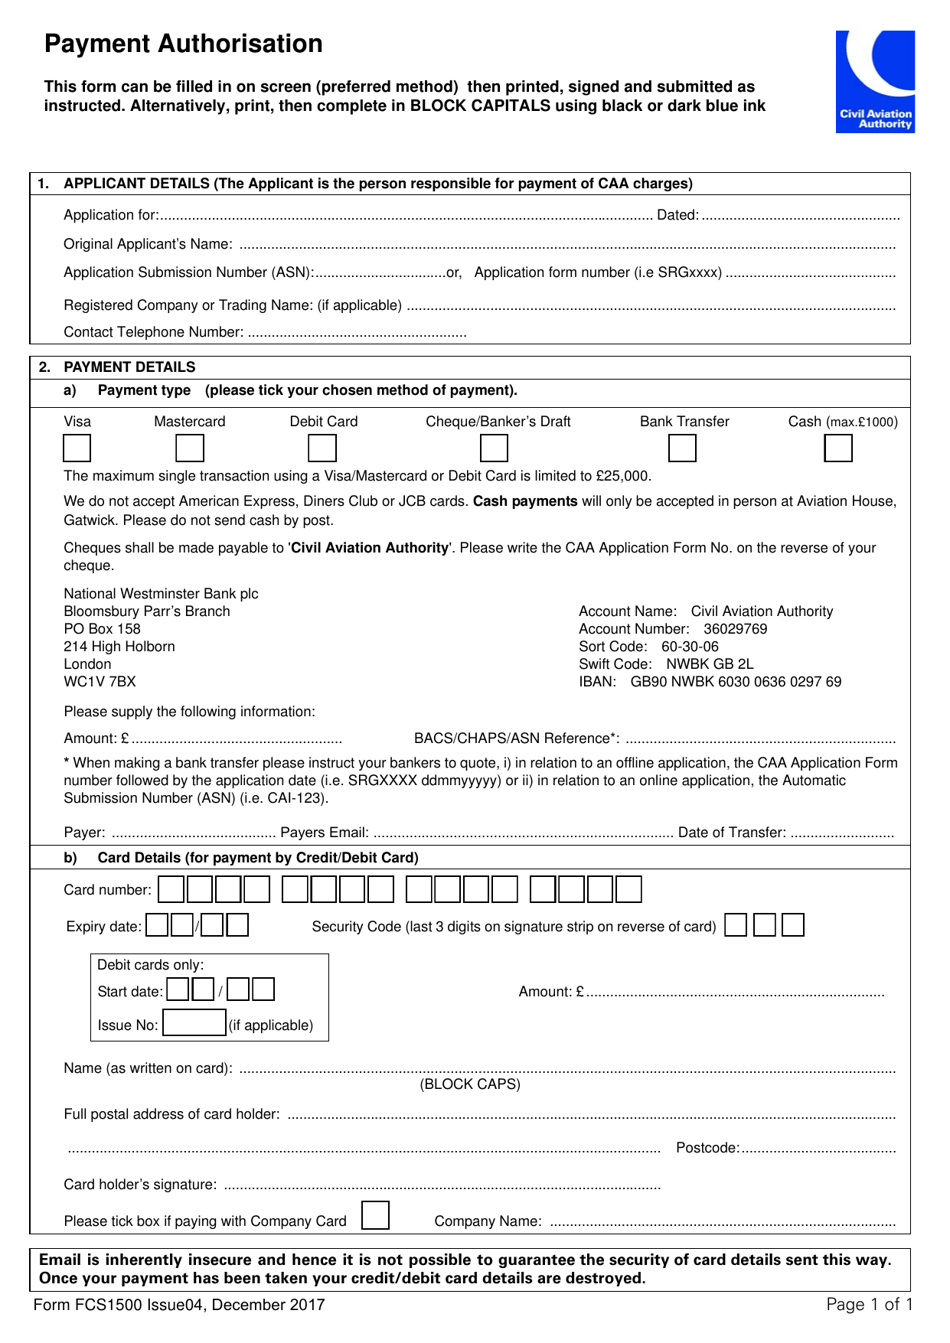 Form FCS1500 Payment Authorisation - United Kingdom, Page 1